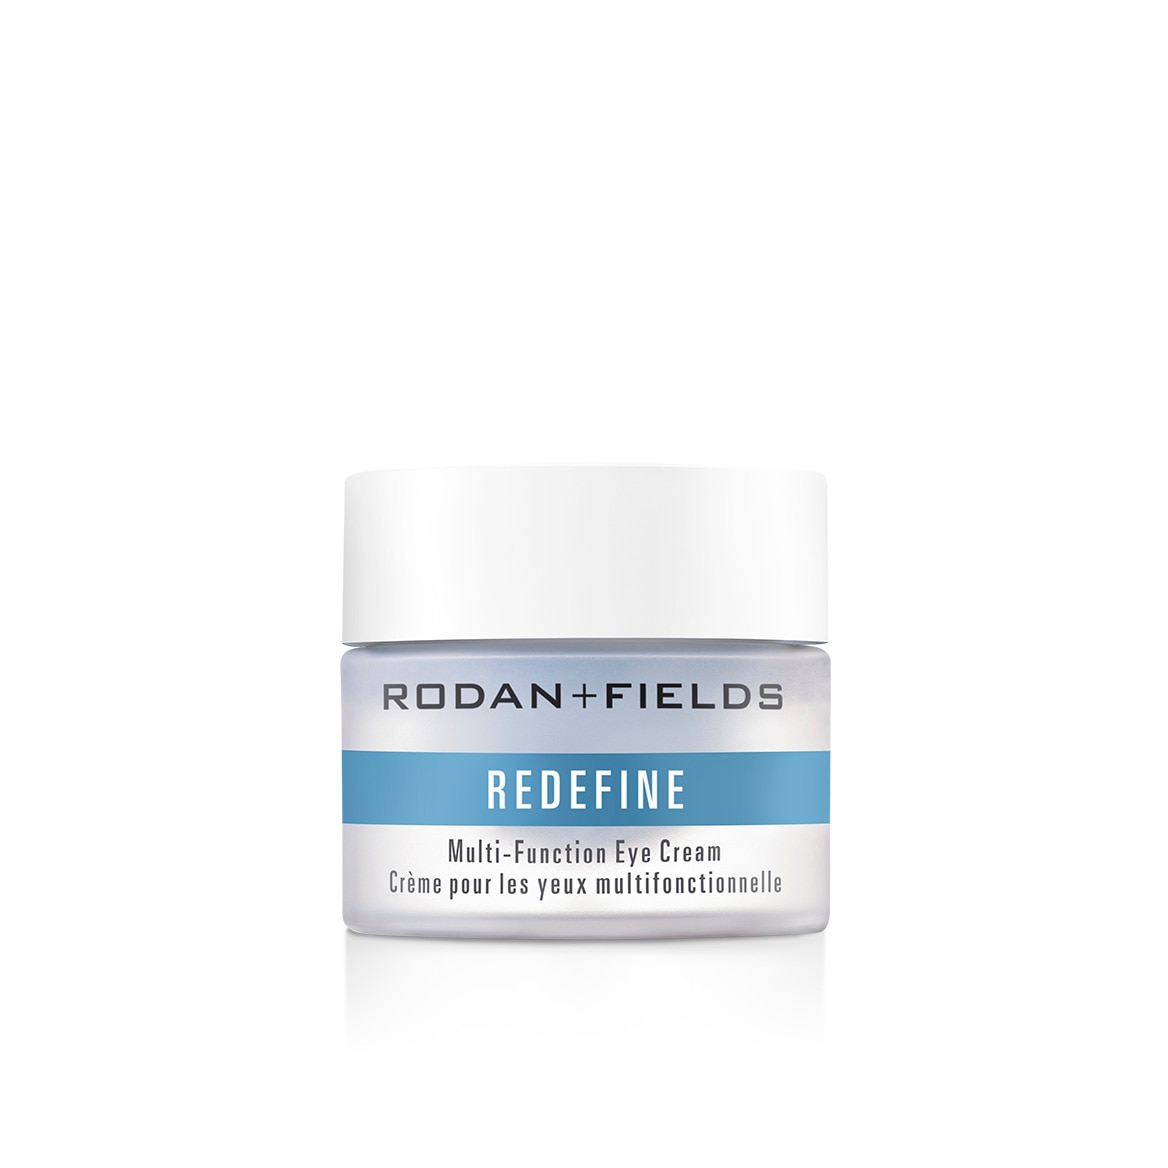 Rodan + Fields REDEFINE Multi-Function Eye Cream